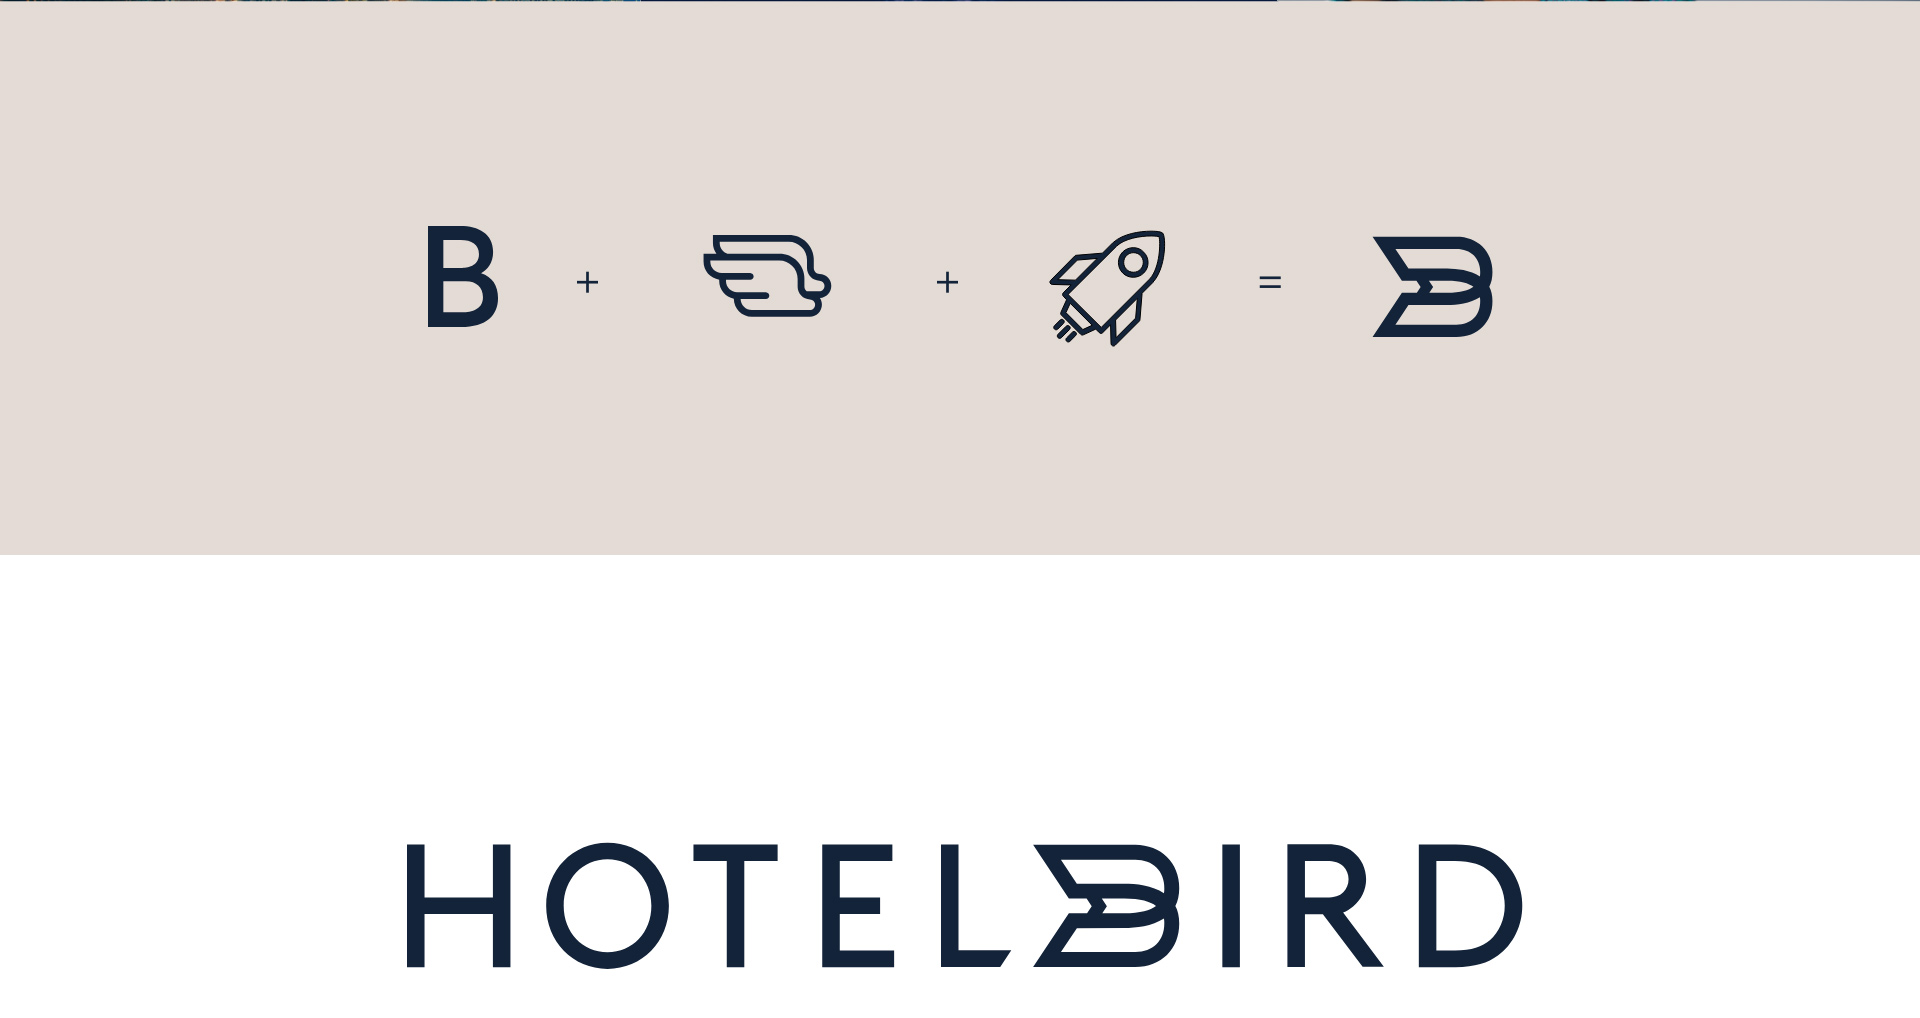 Hotelbird 19